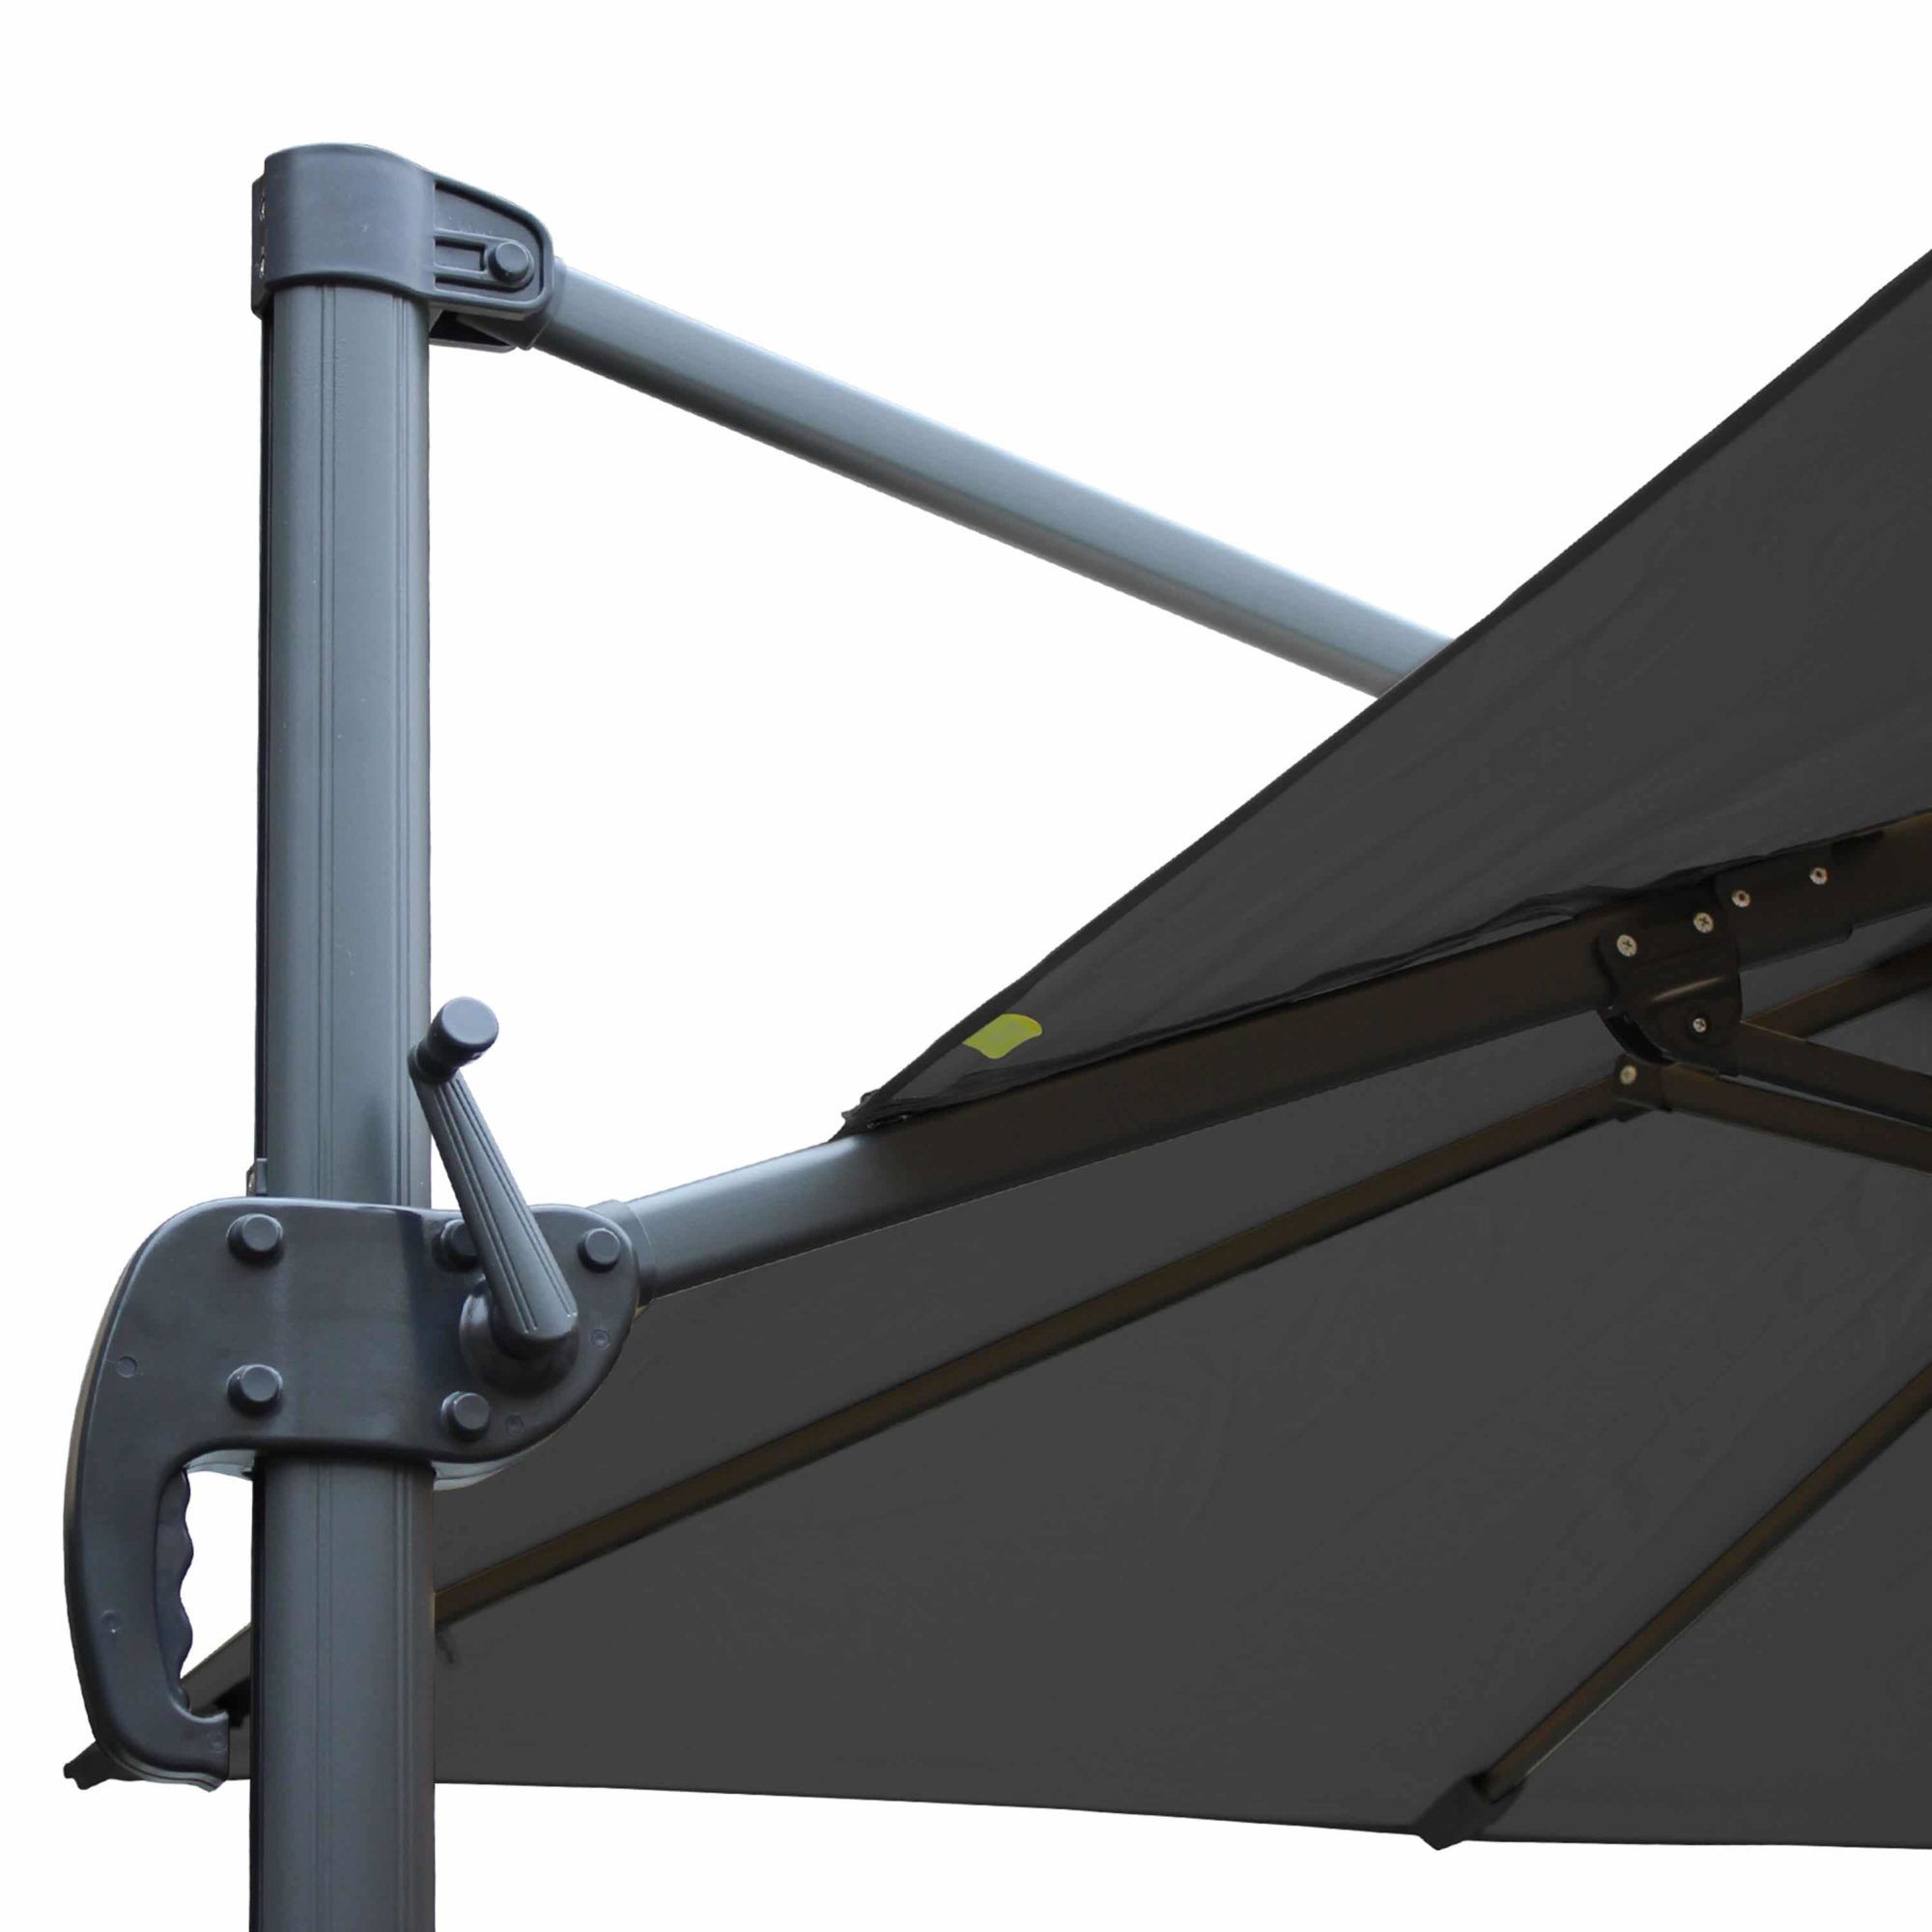 BISCAROSSE 2x3m Aluminium Cantilever Outdoor Umbrella Grey with 360 Rotation Pedal